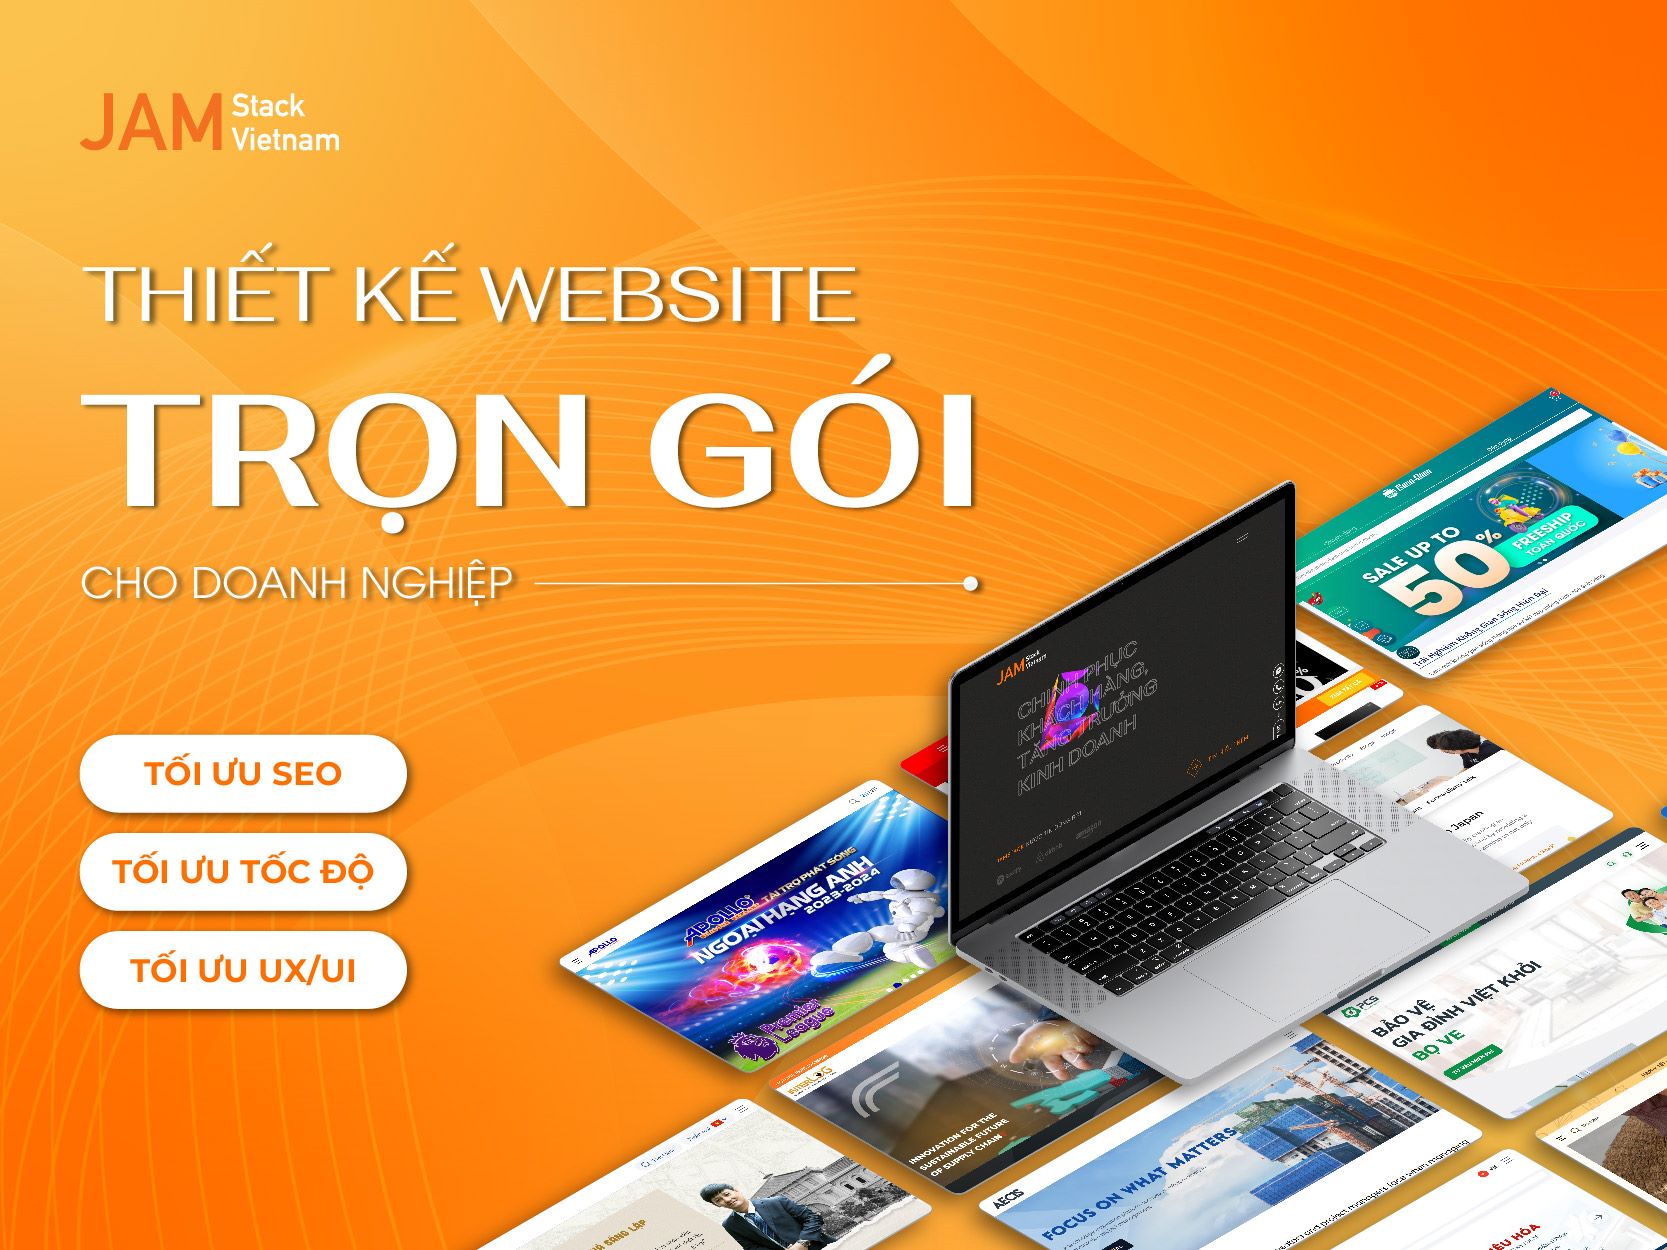 Thiết kế website chuẩn SEO cùng JAMstack Vietnam